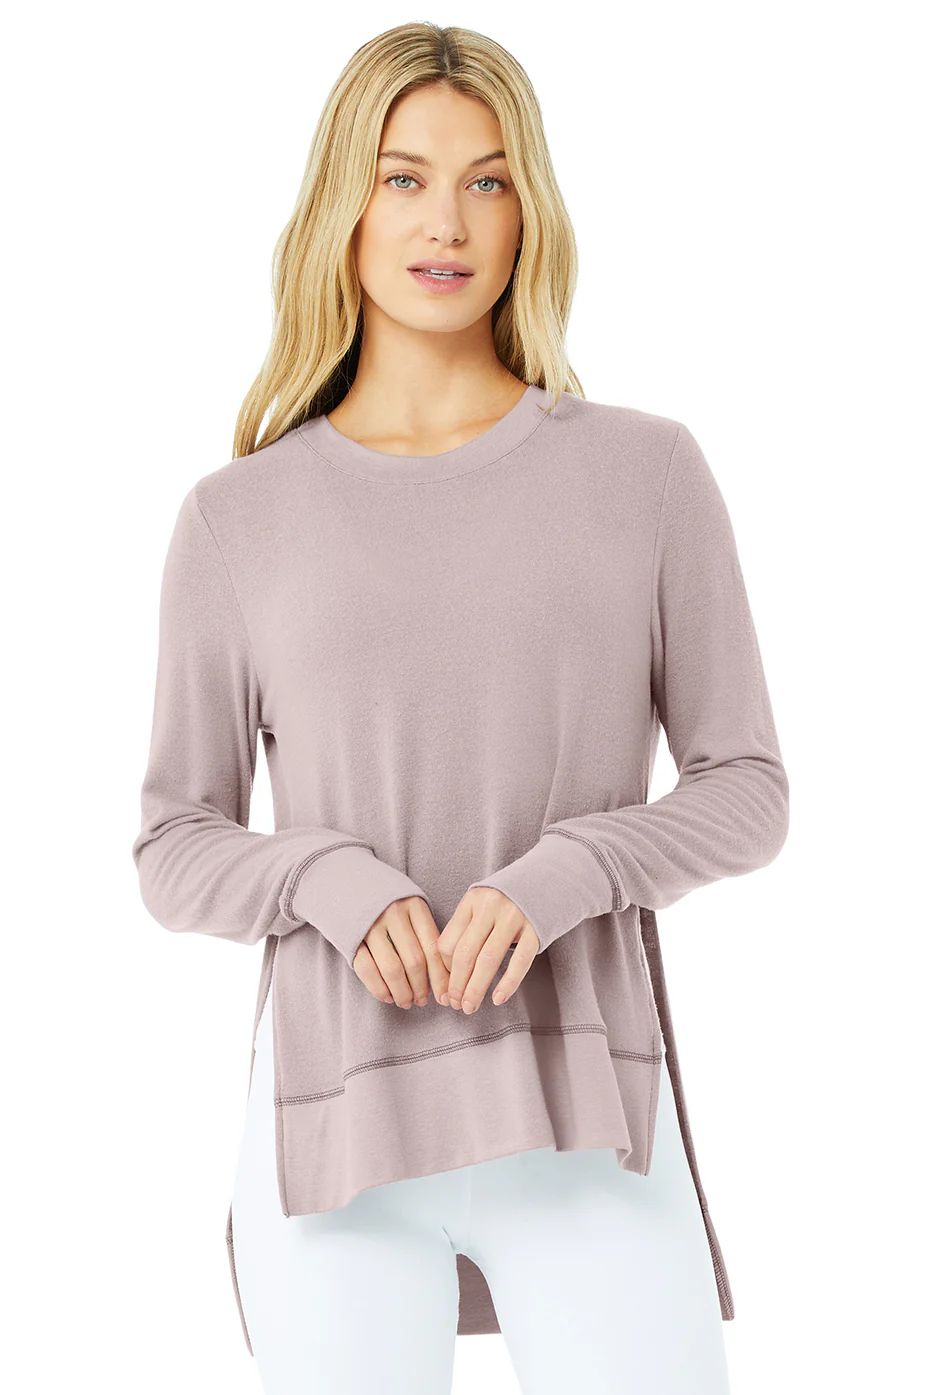 Glimpse Long Sleeve Sweatshirt in Lavender Dusk, Size: Small | Alo YogaÂ® | Alo Yoga